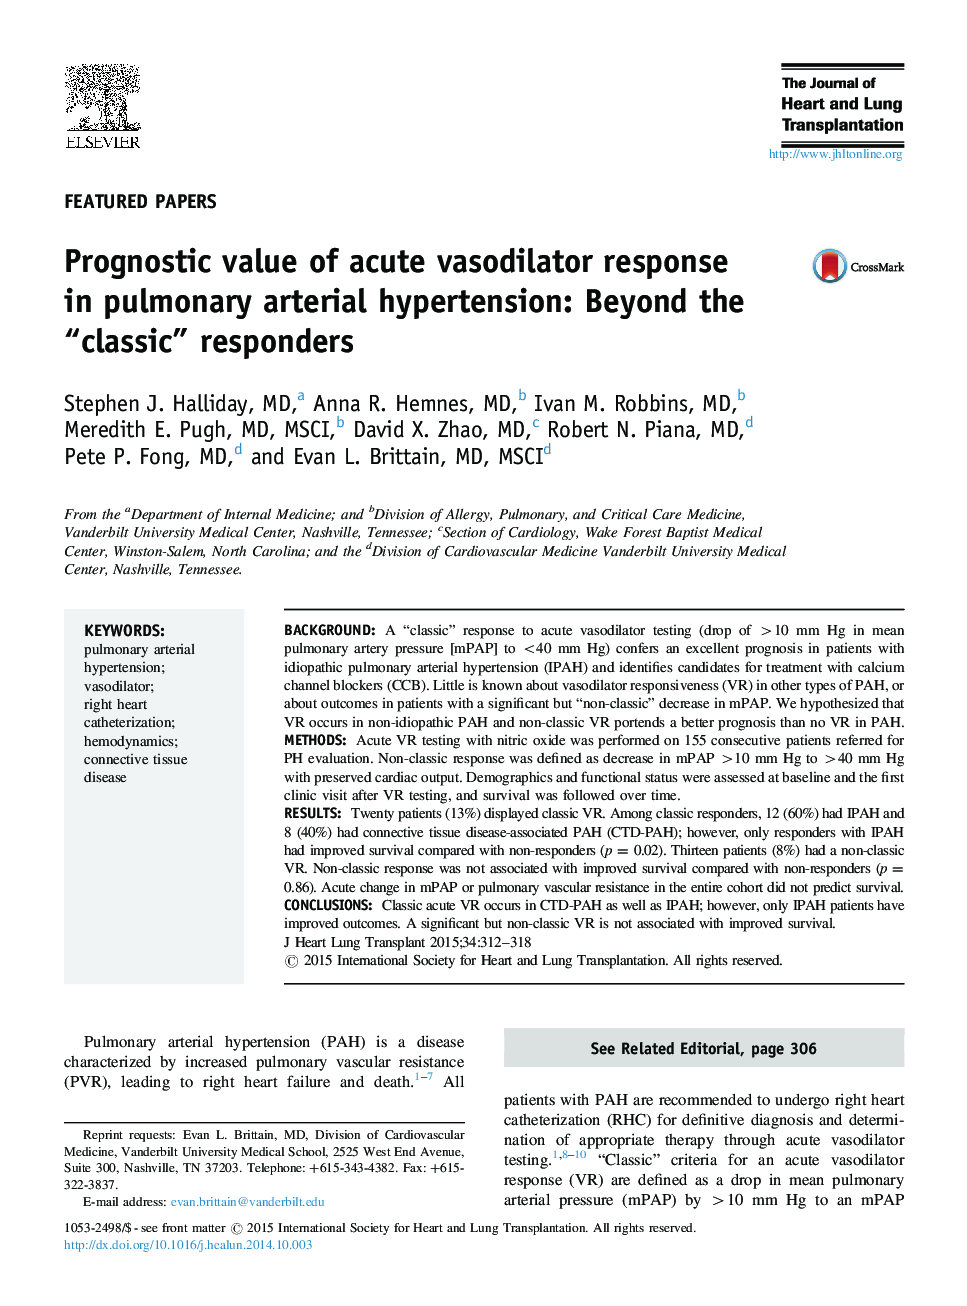 Prognostic value of acute vasodilator response in pulmonary arterial hypertension: Beyond the “classic” responders